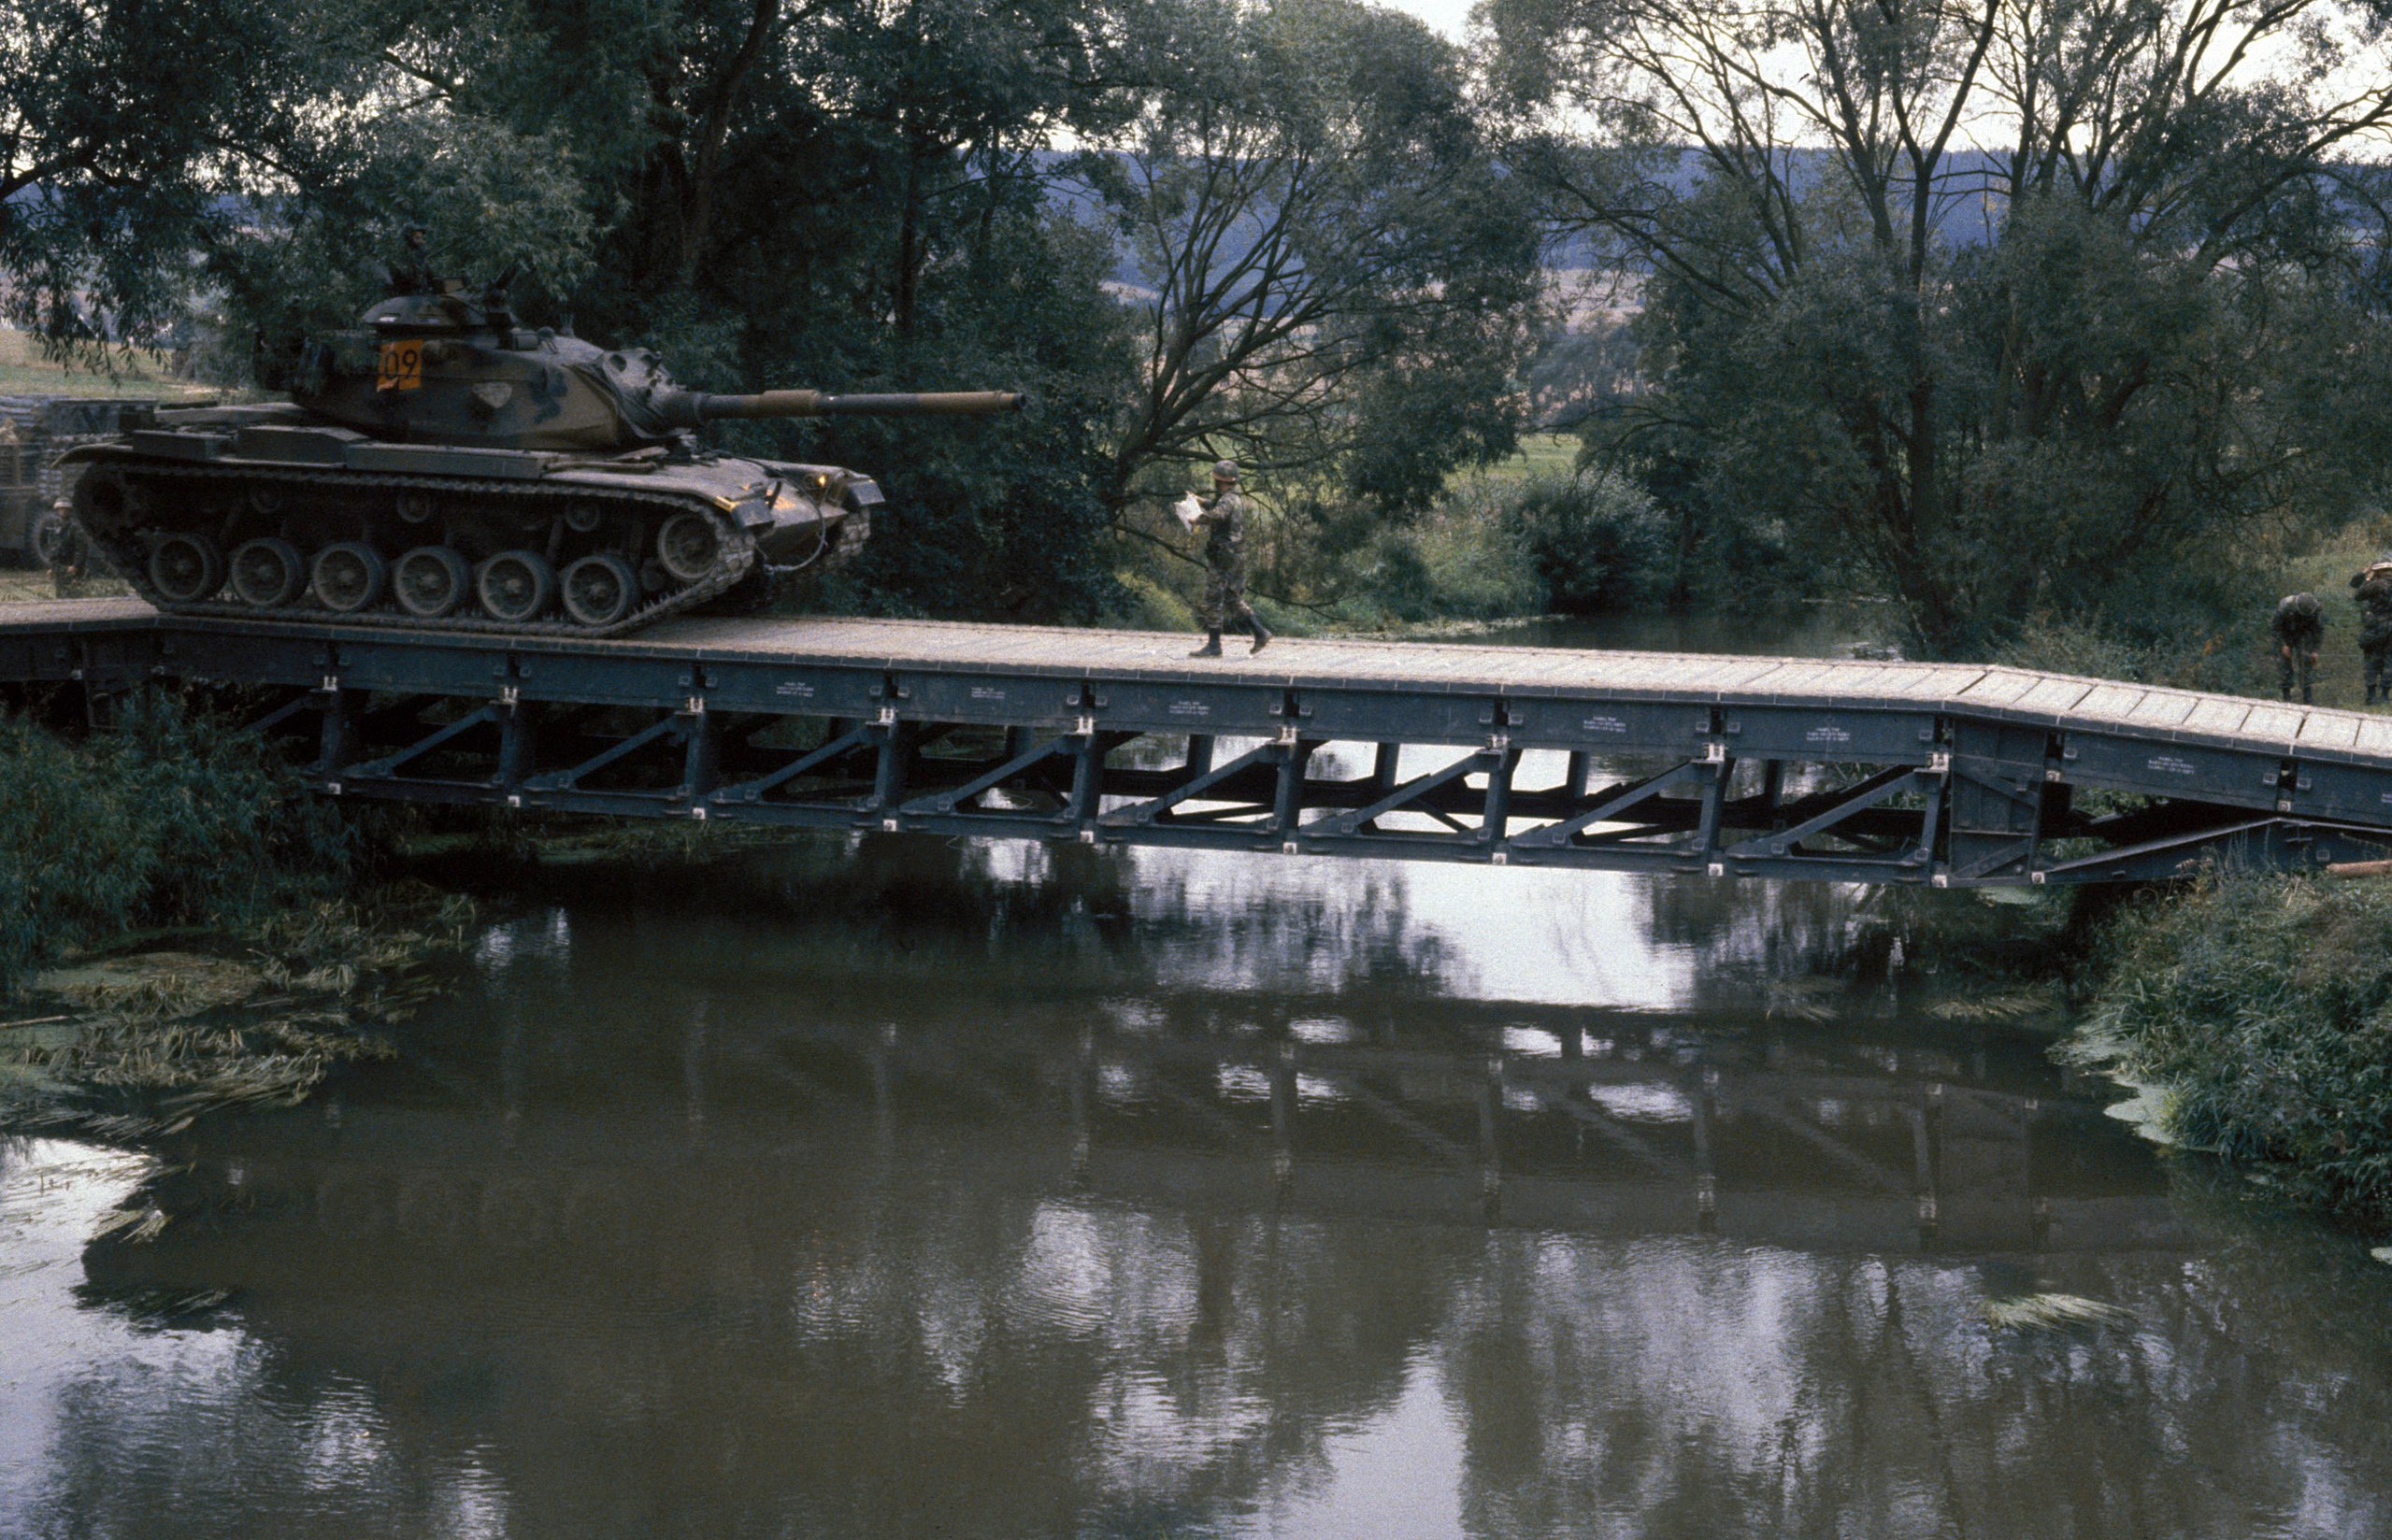 2560px-DF-ST-85-04824_An_M60A3_main_battle_tank_crosses_a_medium_girder_bridge_during_Exercise...jpg